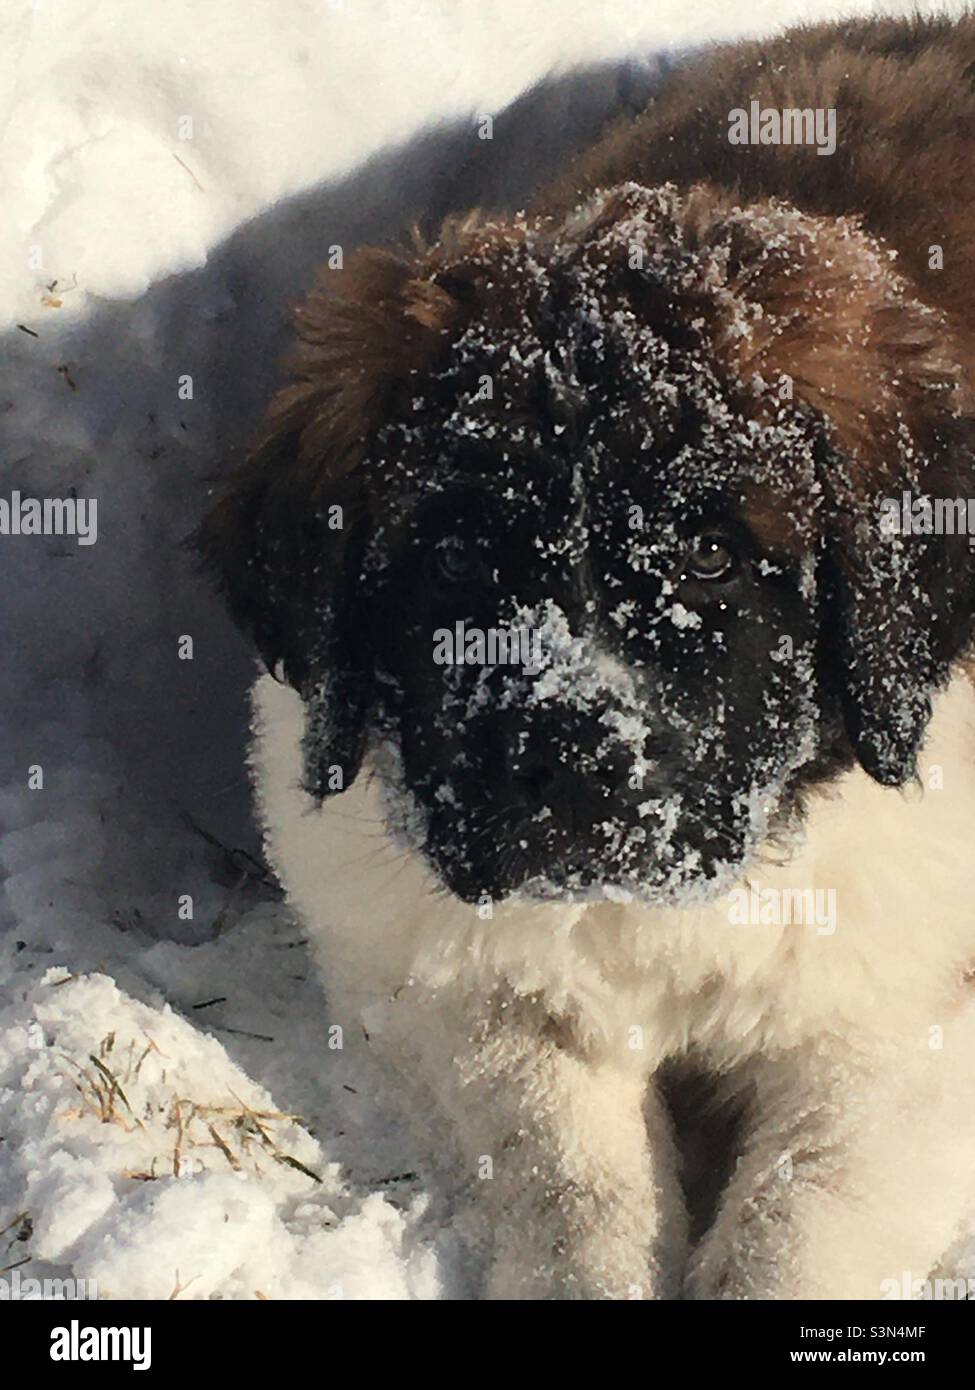 Saint Bernard puppy in the snow Stock Photo